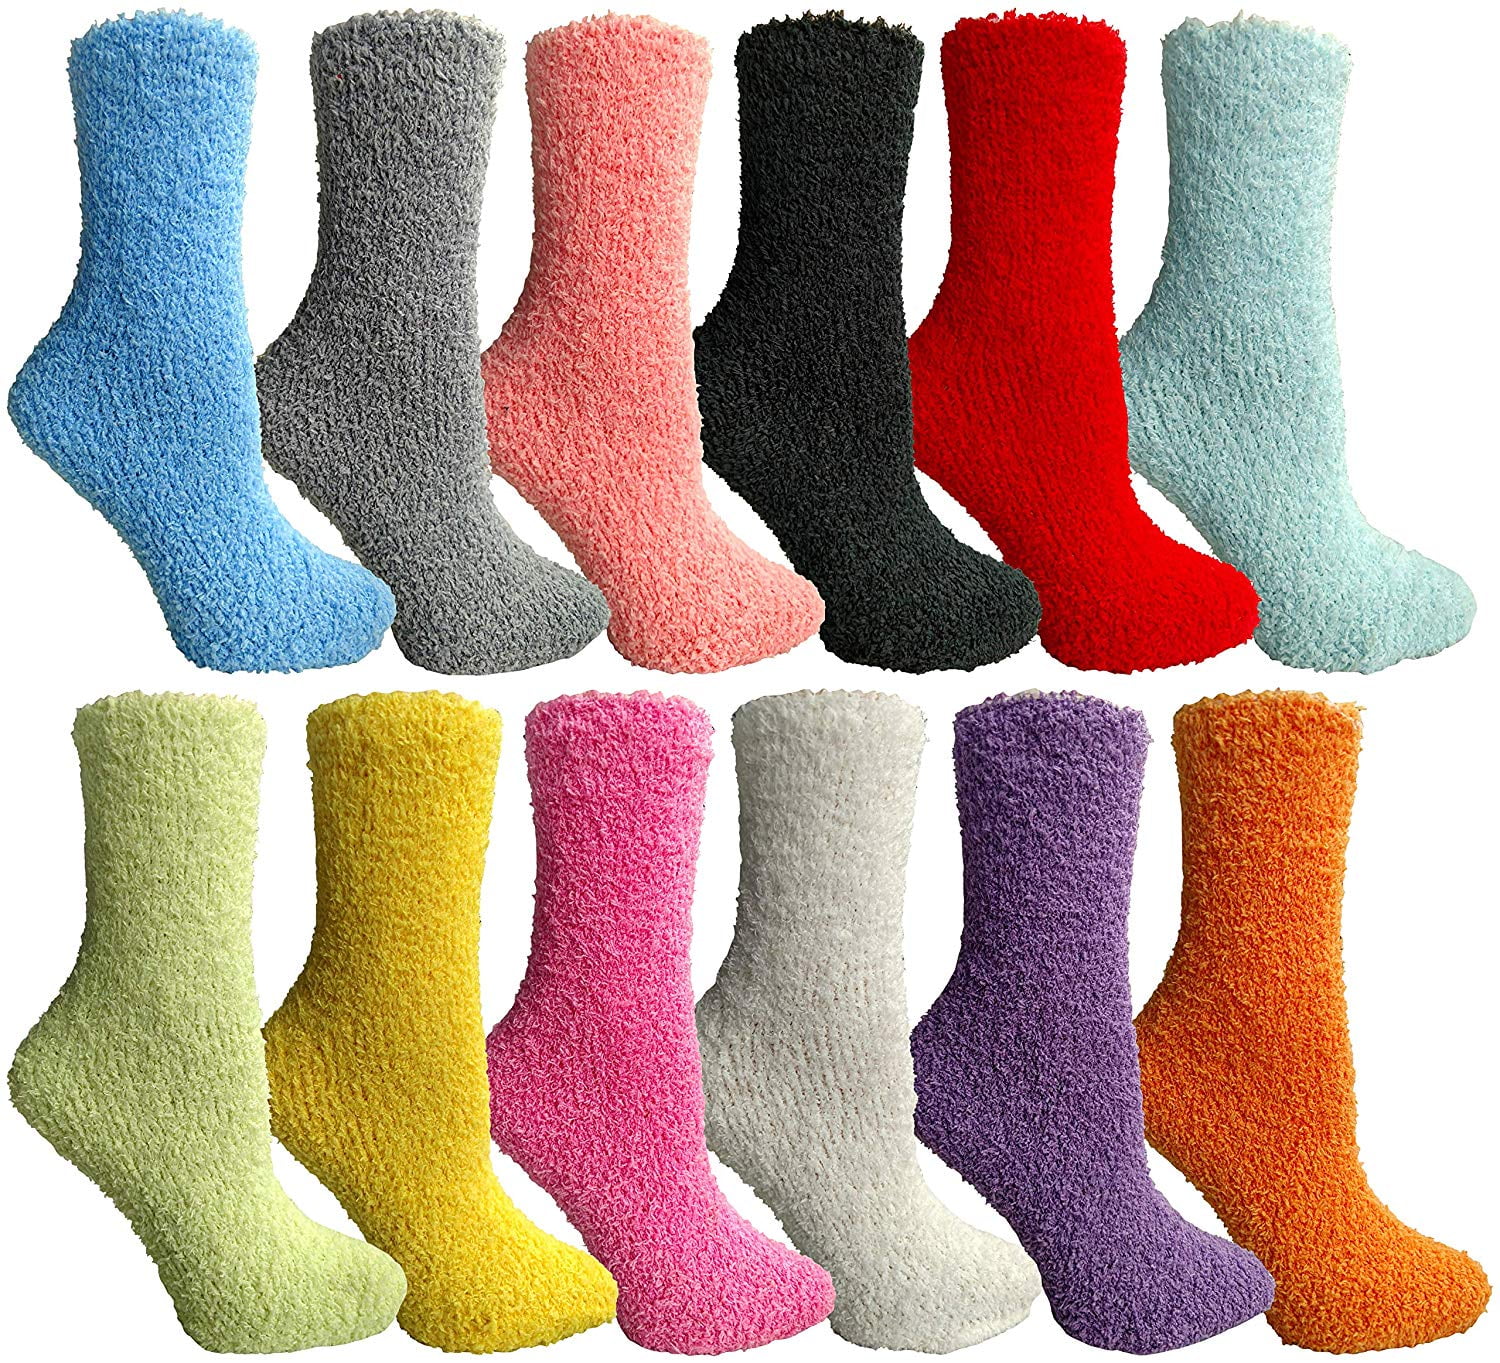 Ryi girls boys toddler socks cute animal cozy fuzzy cotton kids socks funny crazy soft socks 3 pack for Christmas